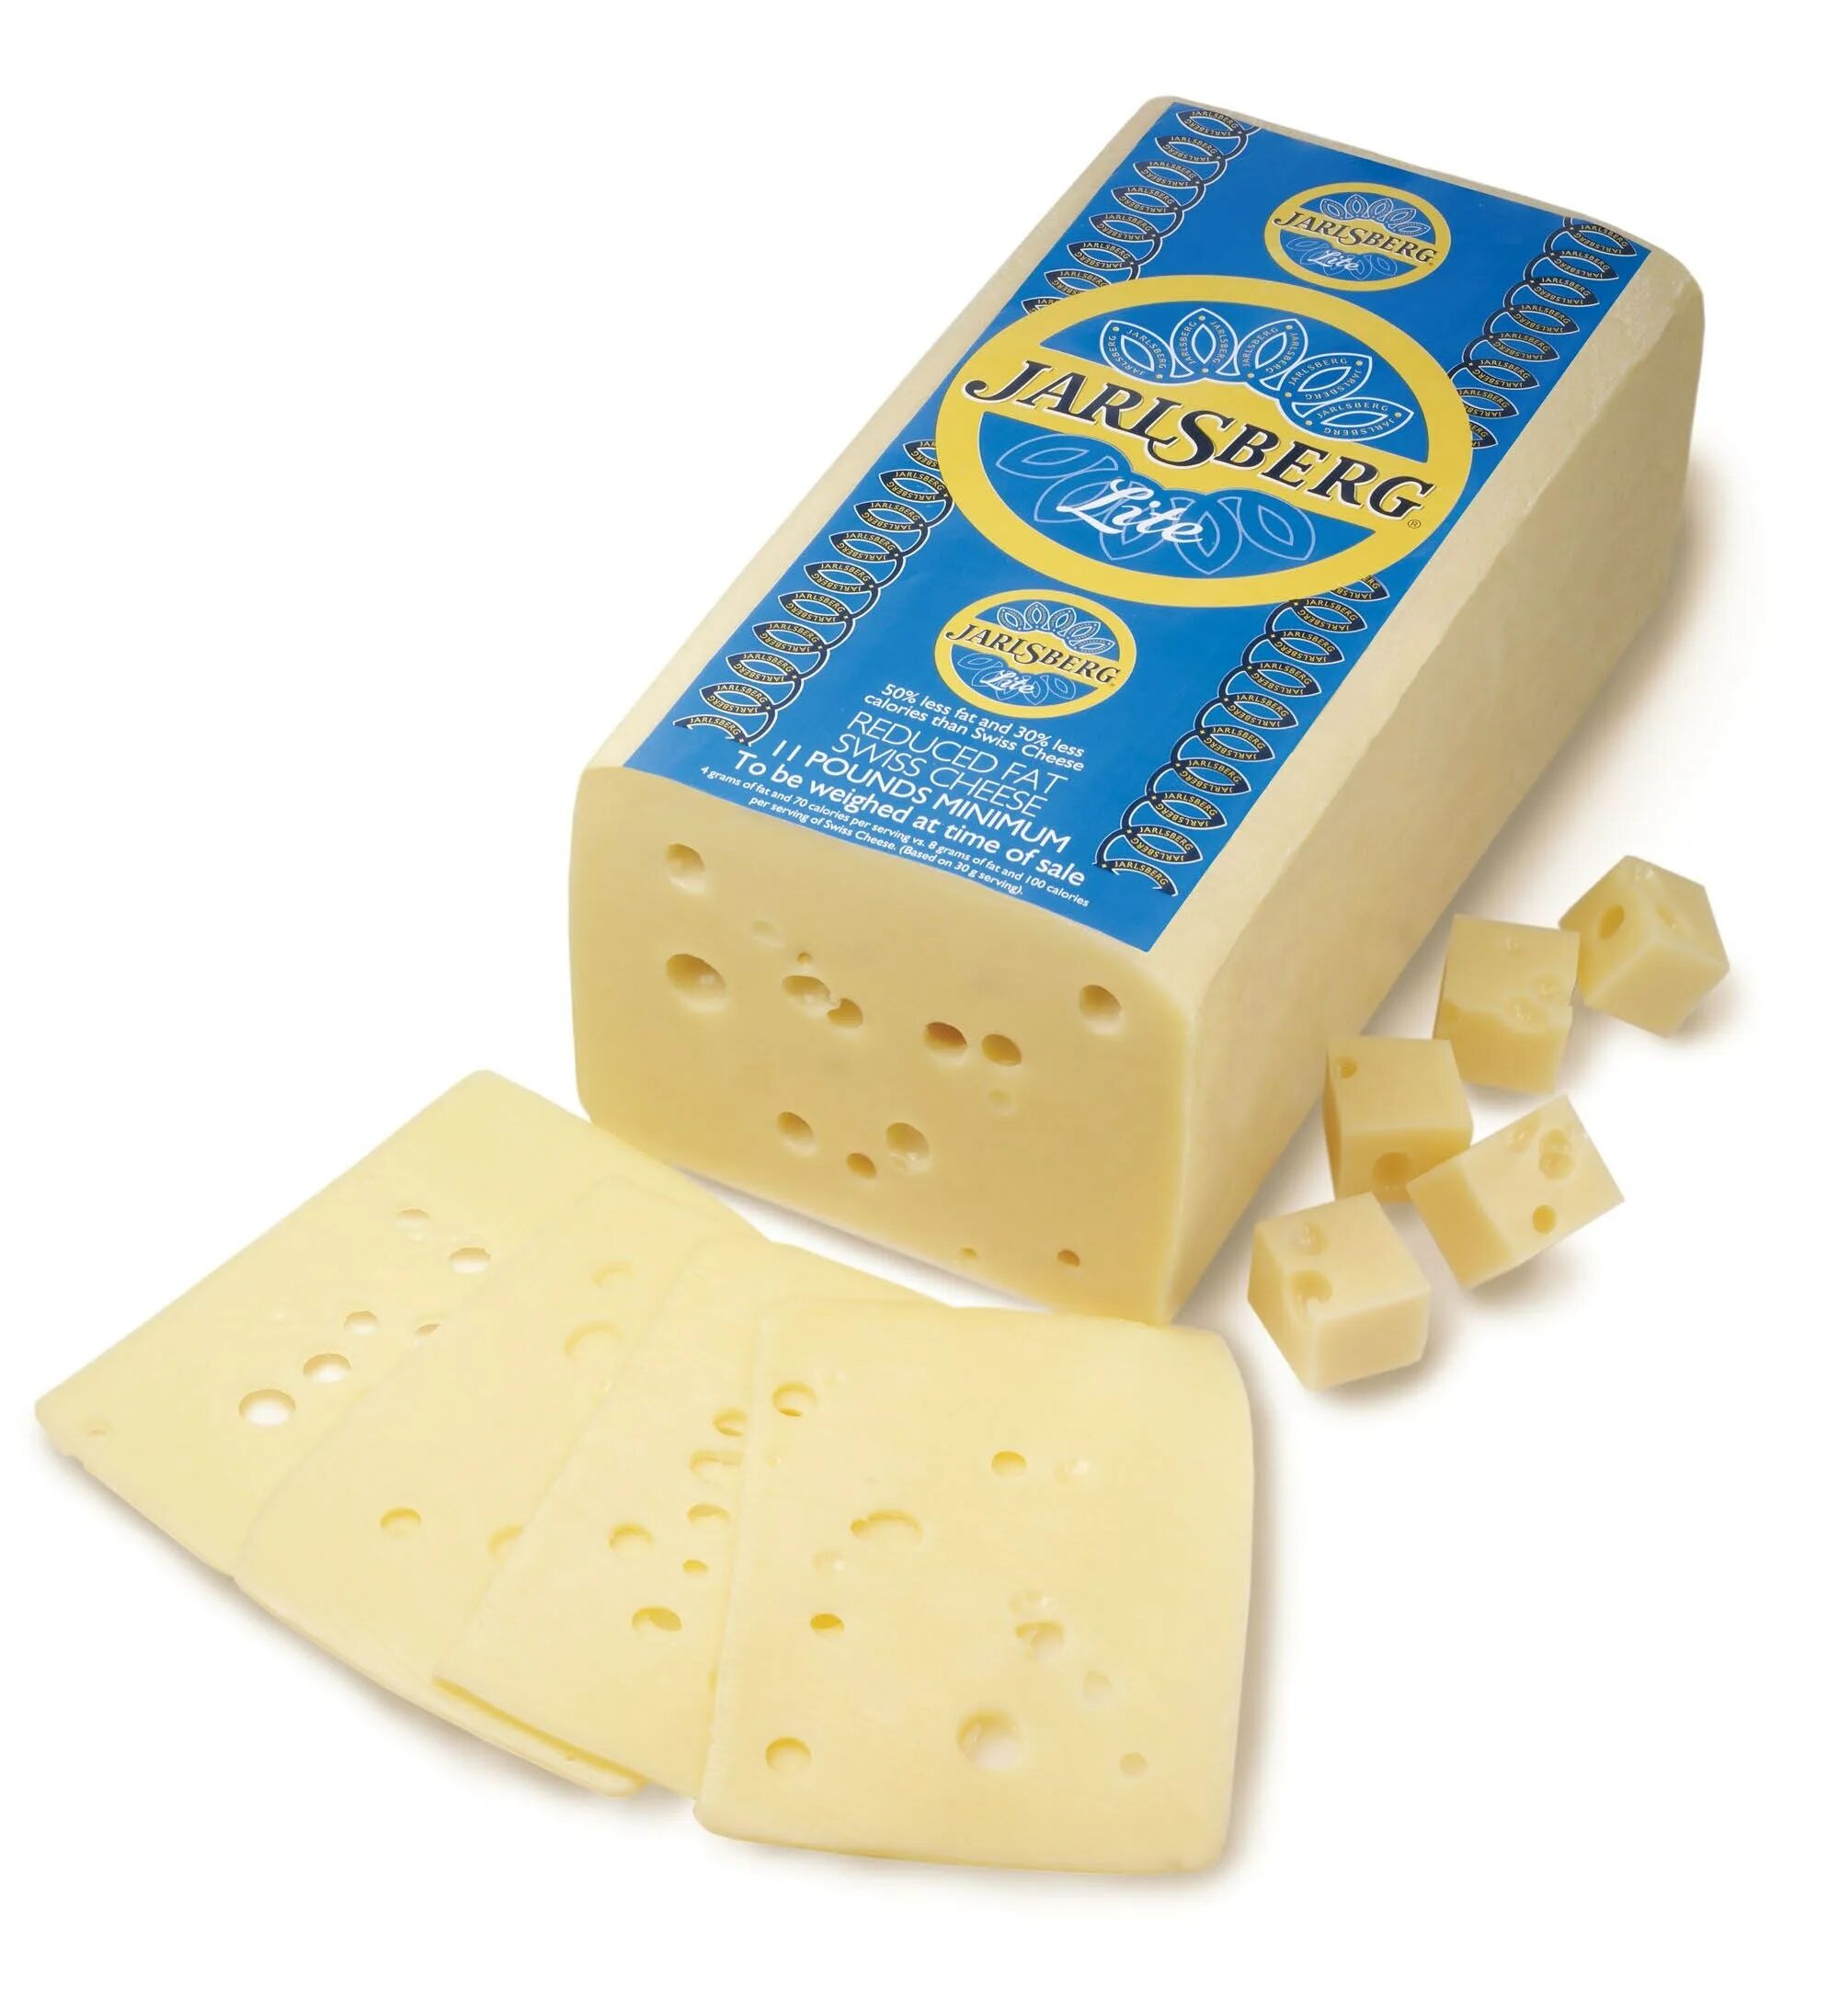 Сырная Долина Маасдам. Сыр Ярлсберг. Сыр марки. Сыр твердый.